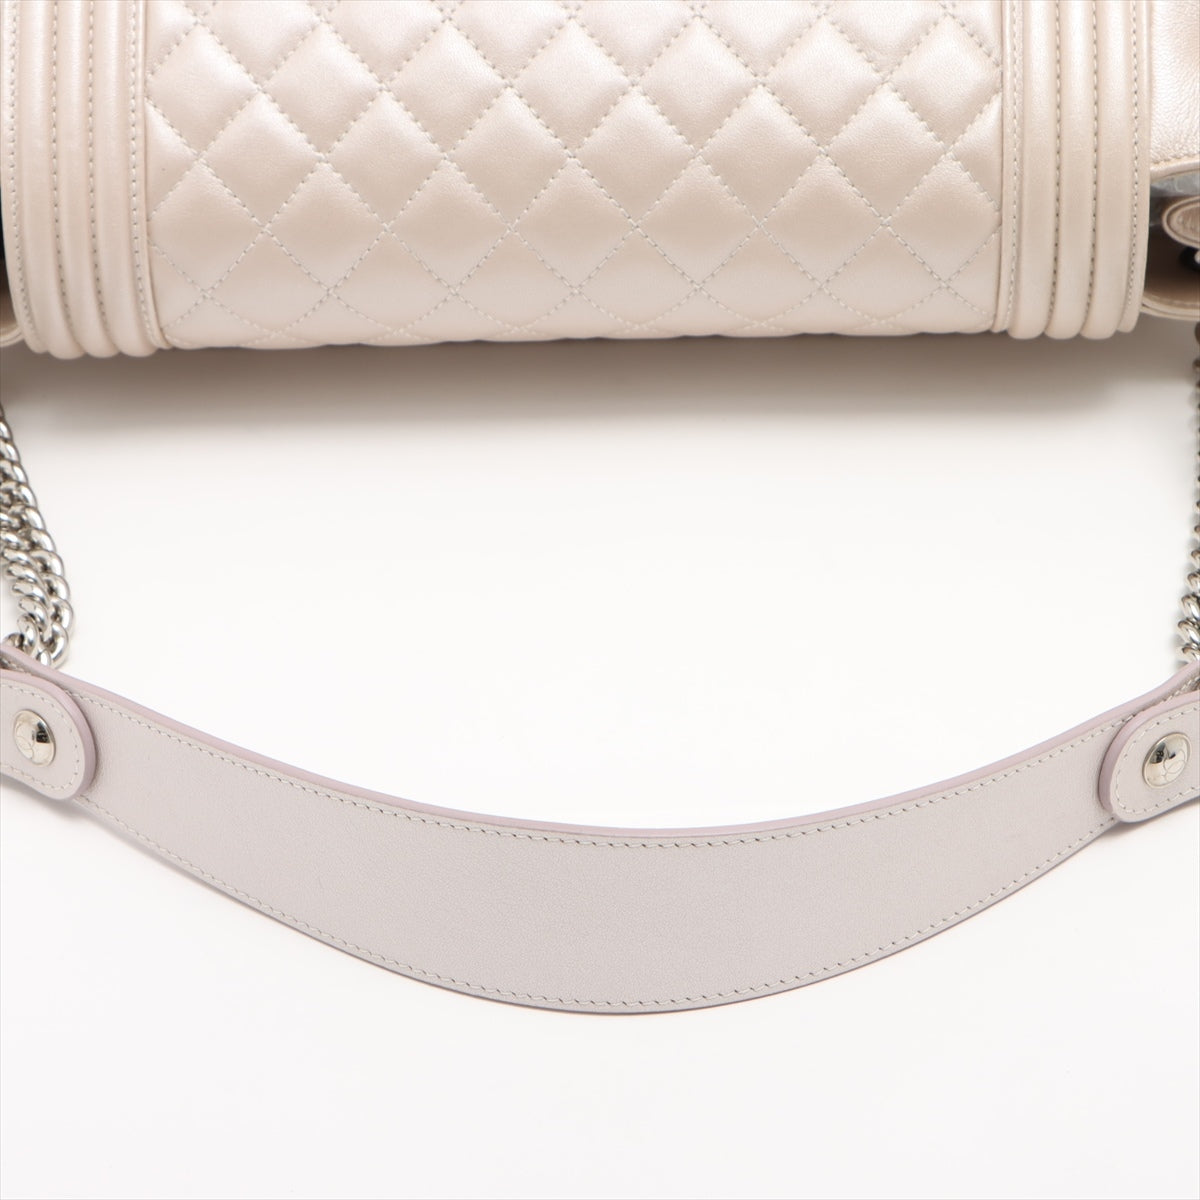 Chanel Boy Chanel Leather Chain Shoulder Bag Beige Silver Metal Fittings 16XXXXXX